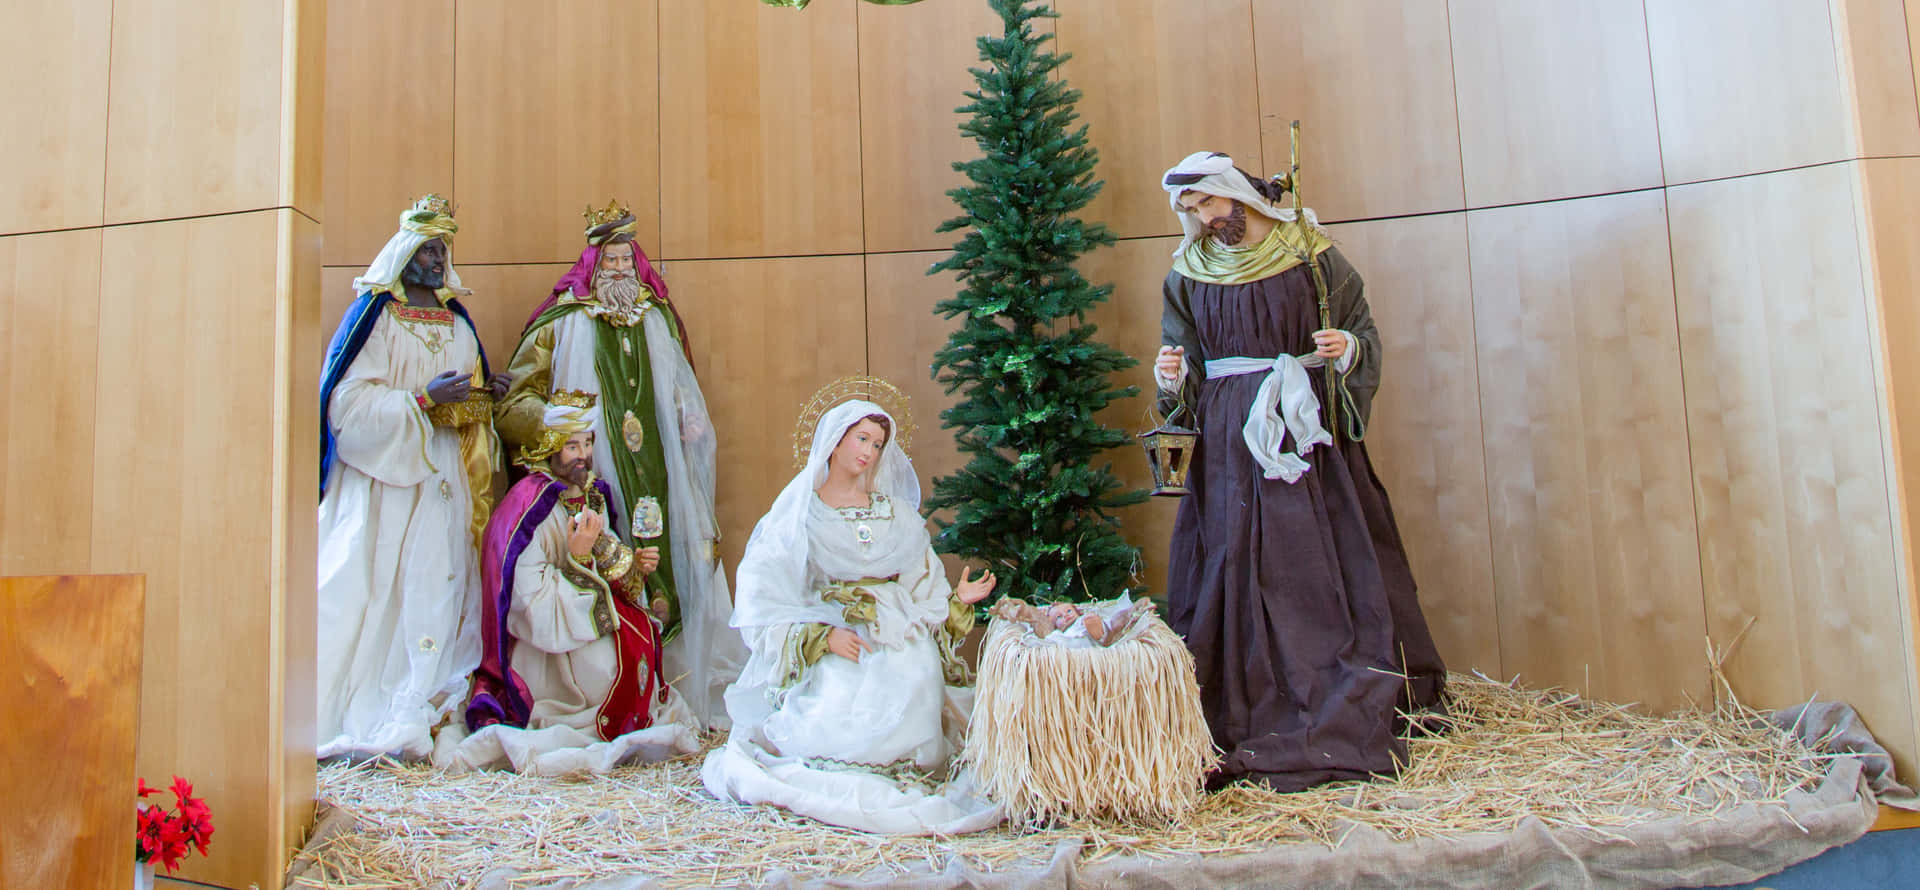 Celebrate the birth of Jesus with this beautiful Nativity Scene.